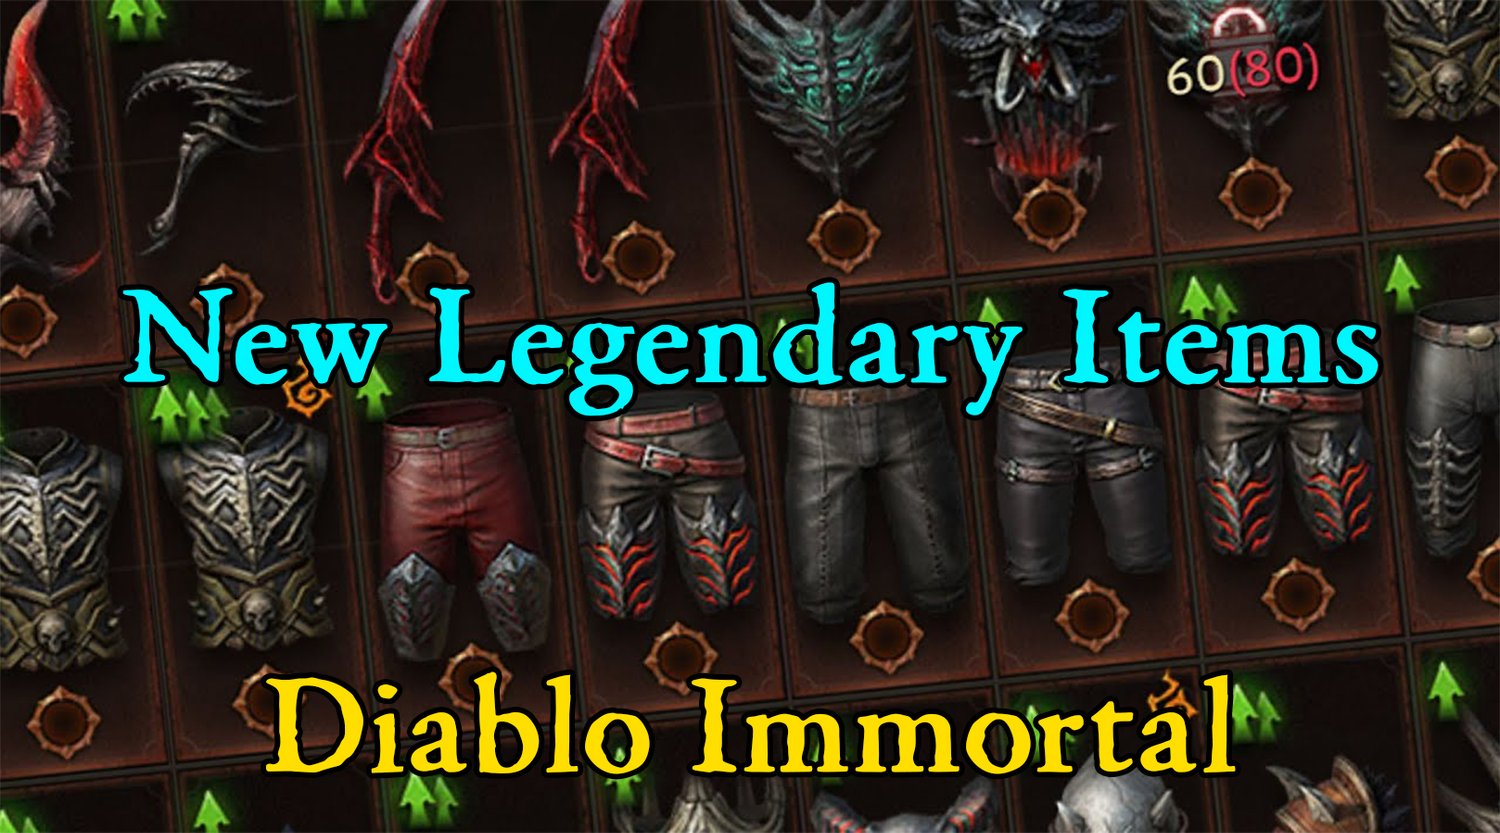 Diablo Immortal 1.5.4 patch notes: Bug fixes, new content, & more